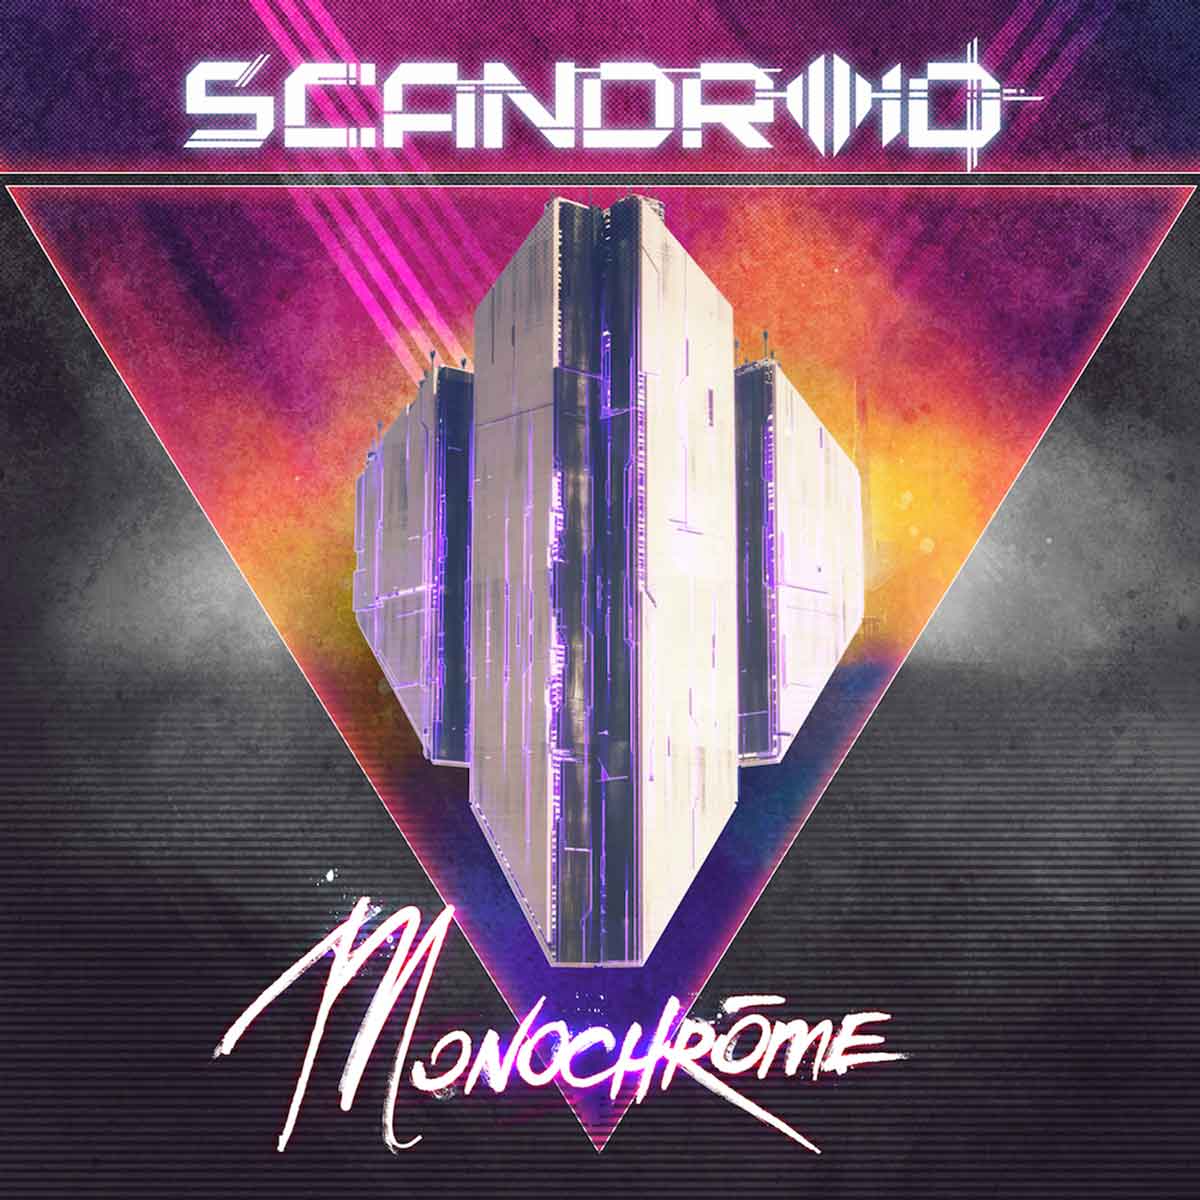 Scandroid Monochrome